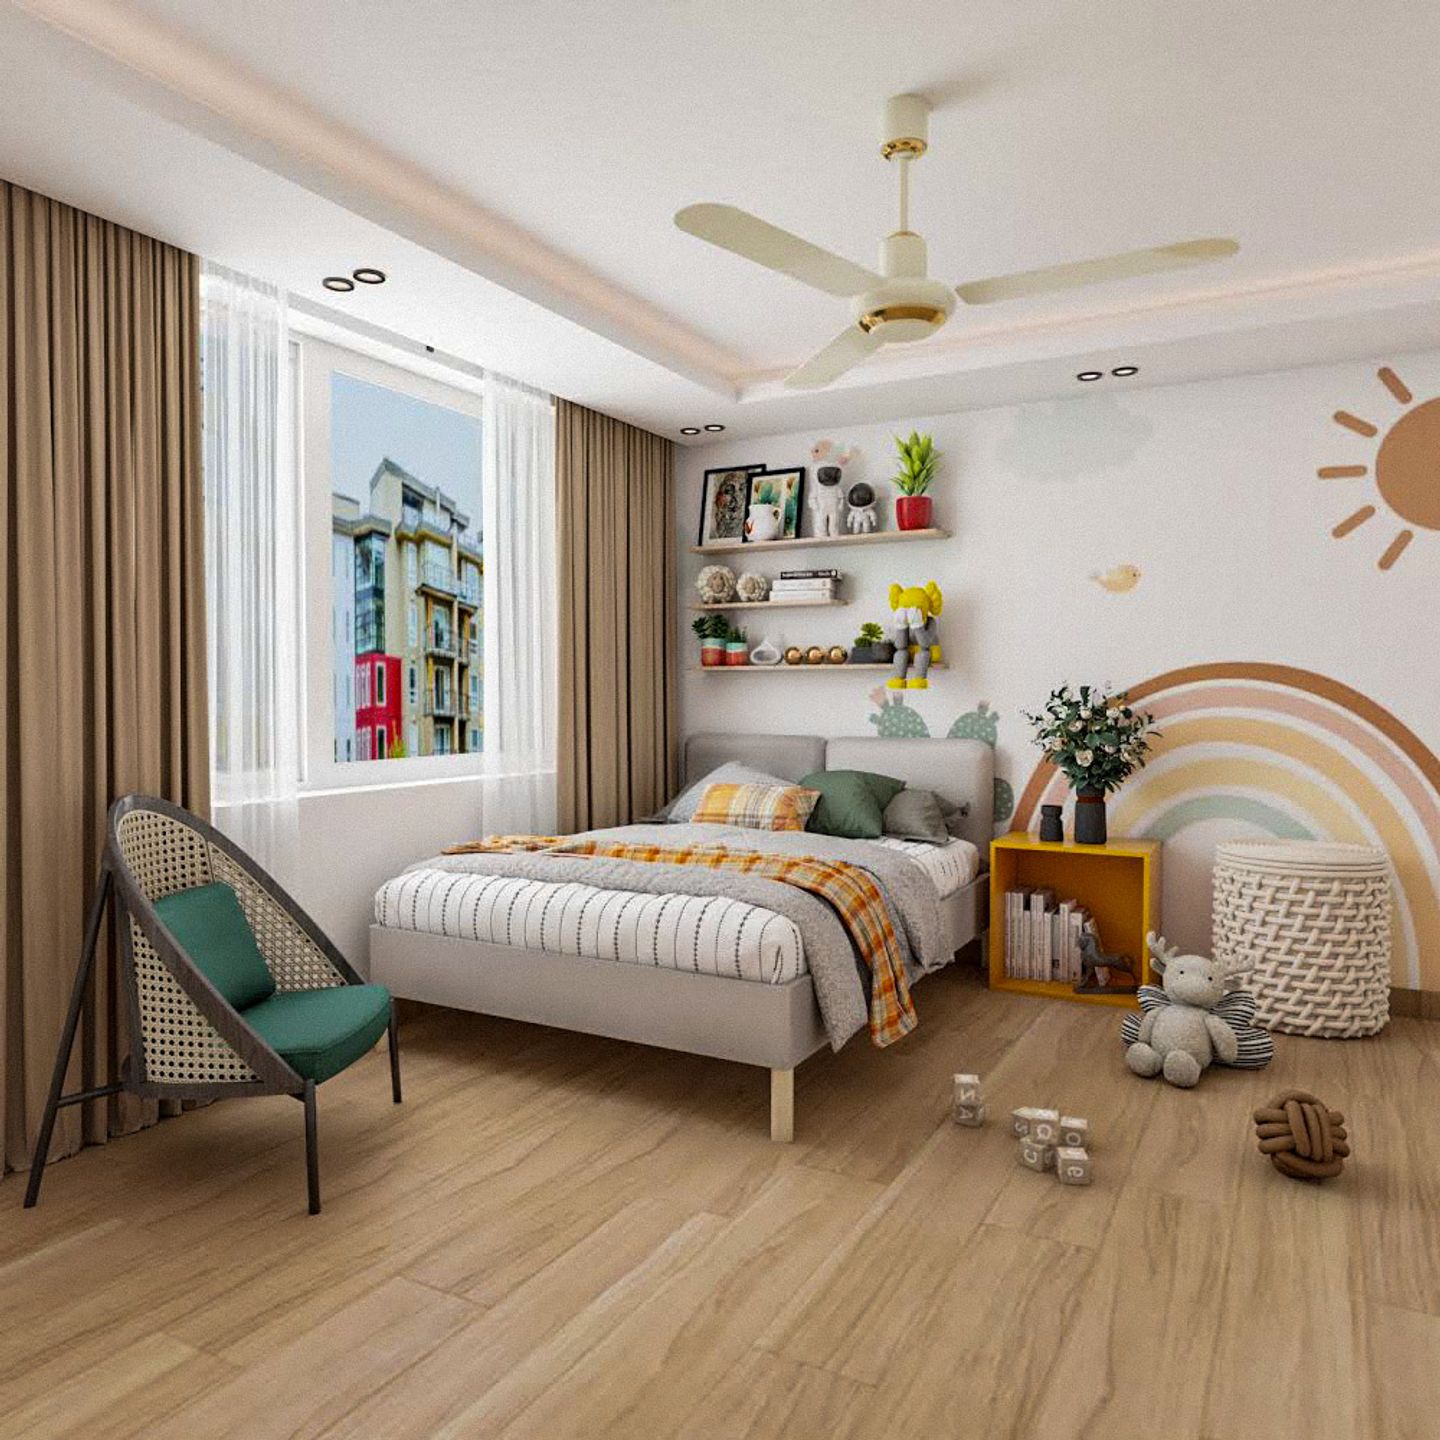 Peripheral Ceiling Design For Kids Bedroom - Livspace